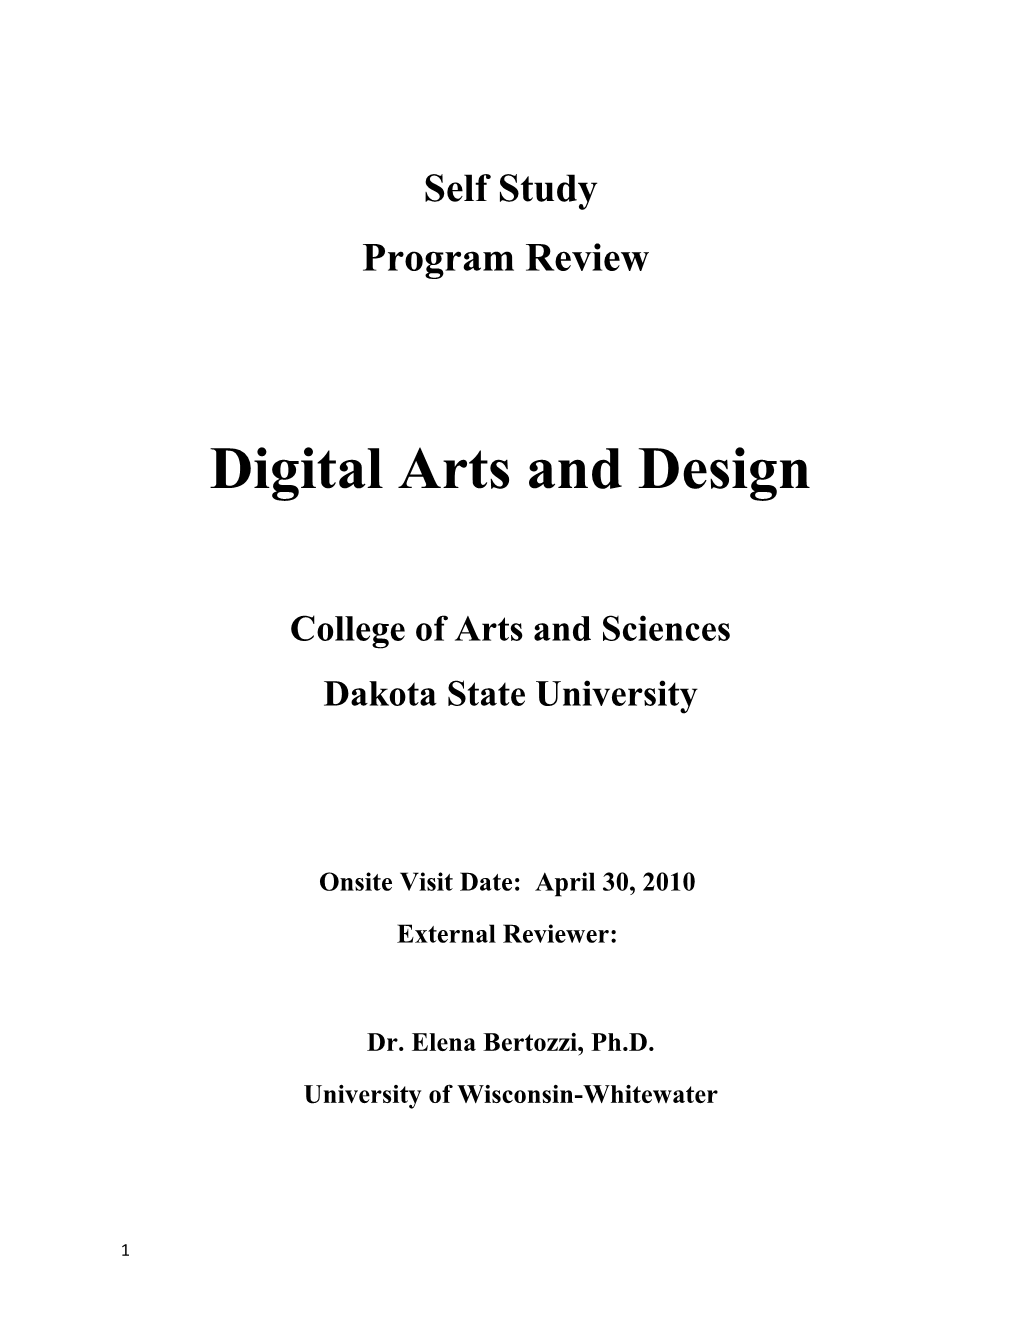 Digital Arts and Design